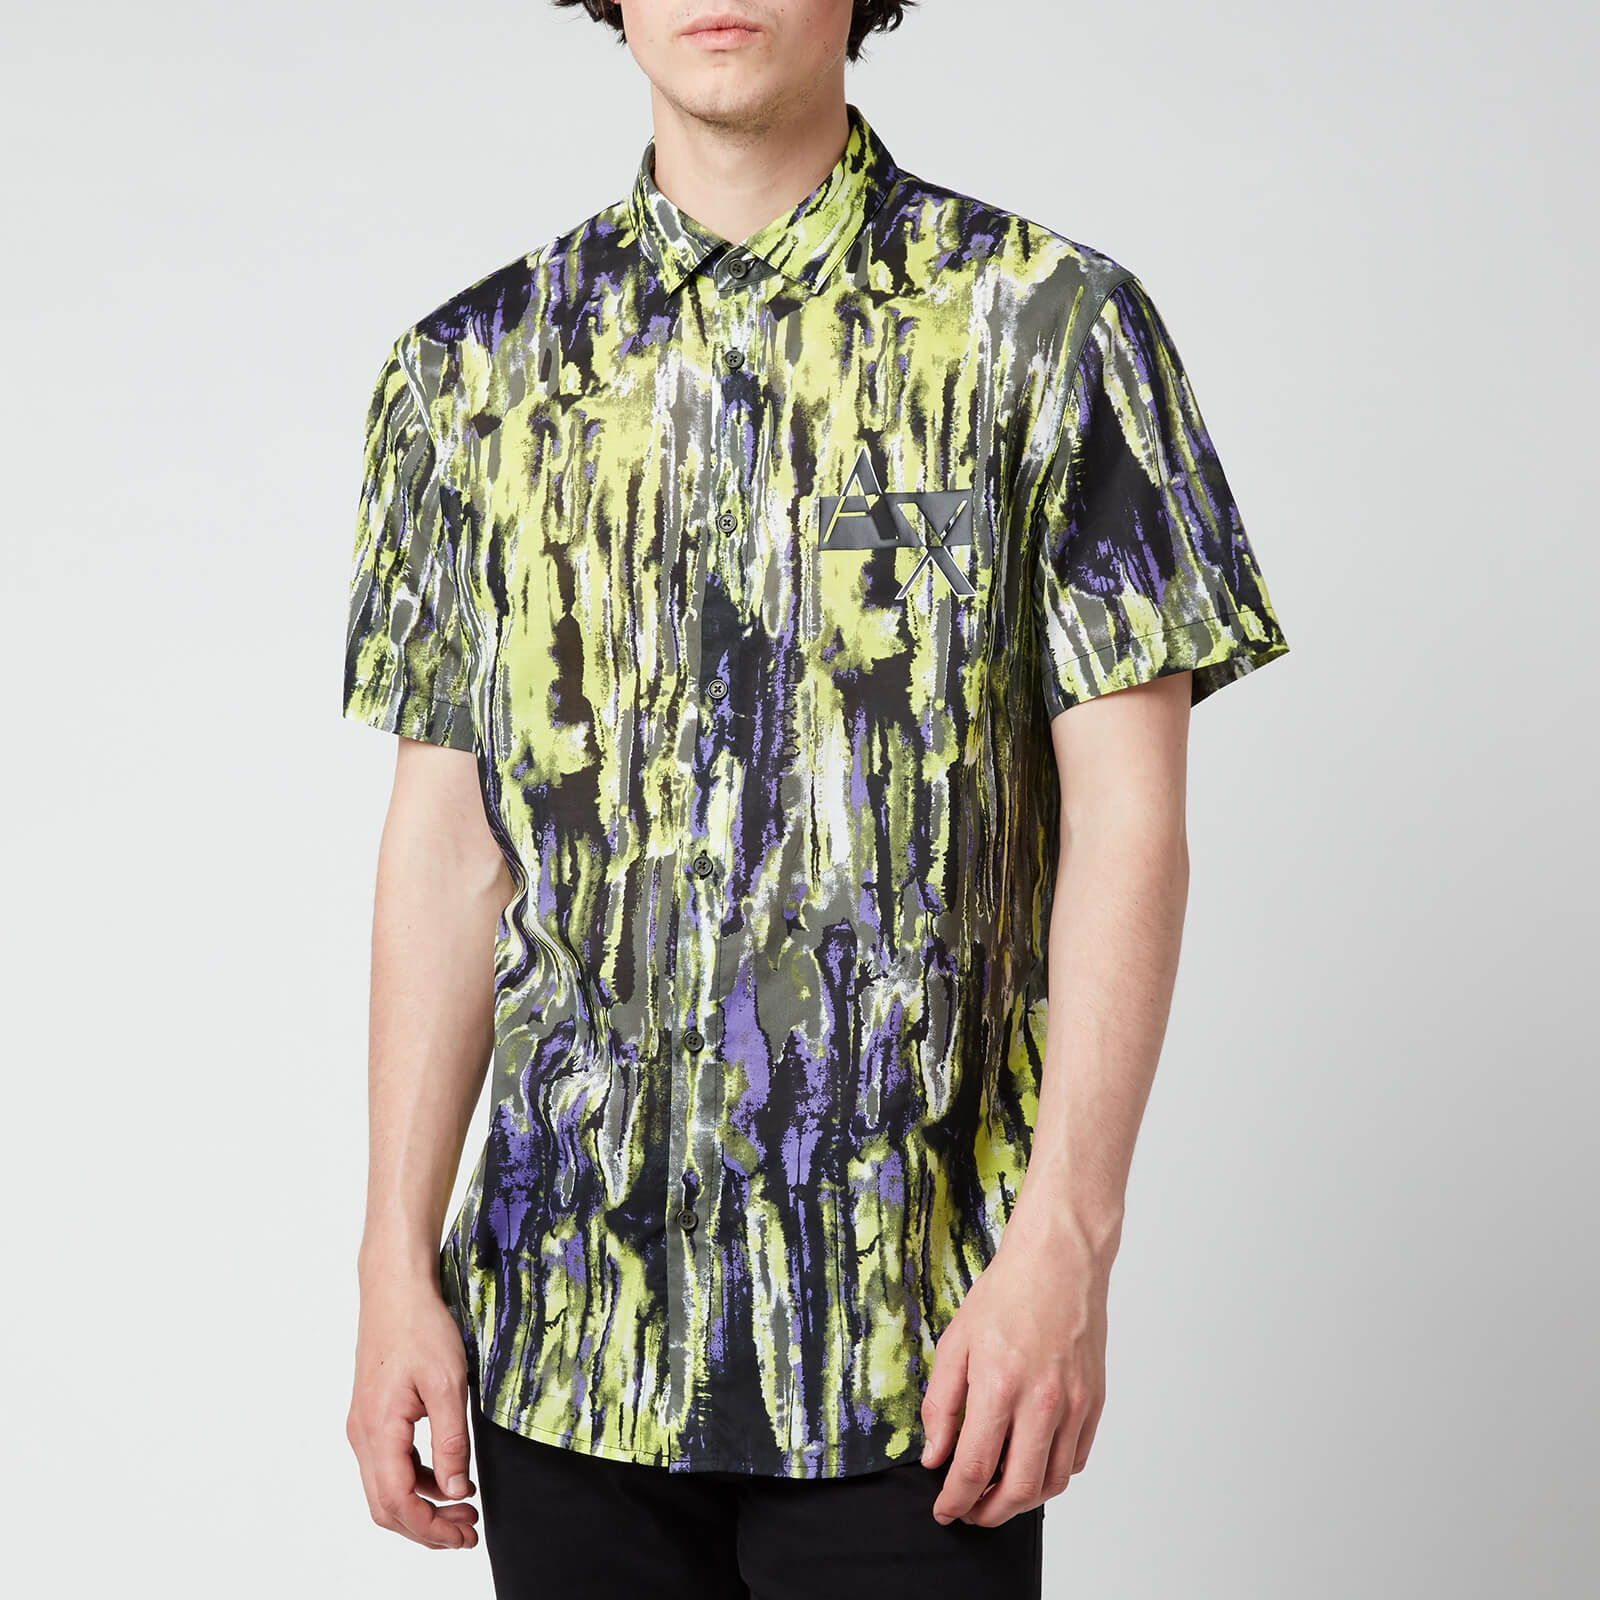 Armani Exchange Men's Printed Short Sleeve Shirt - Multi - S